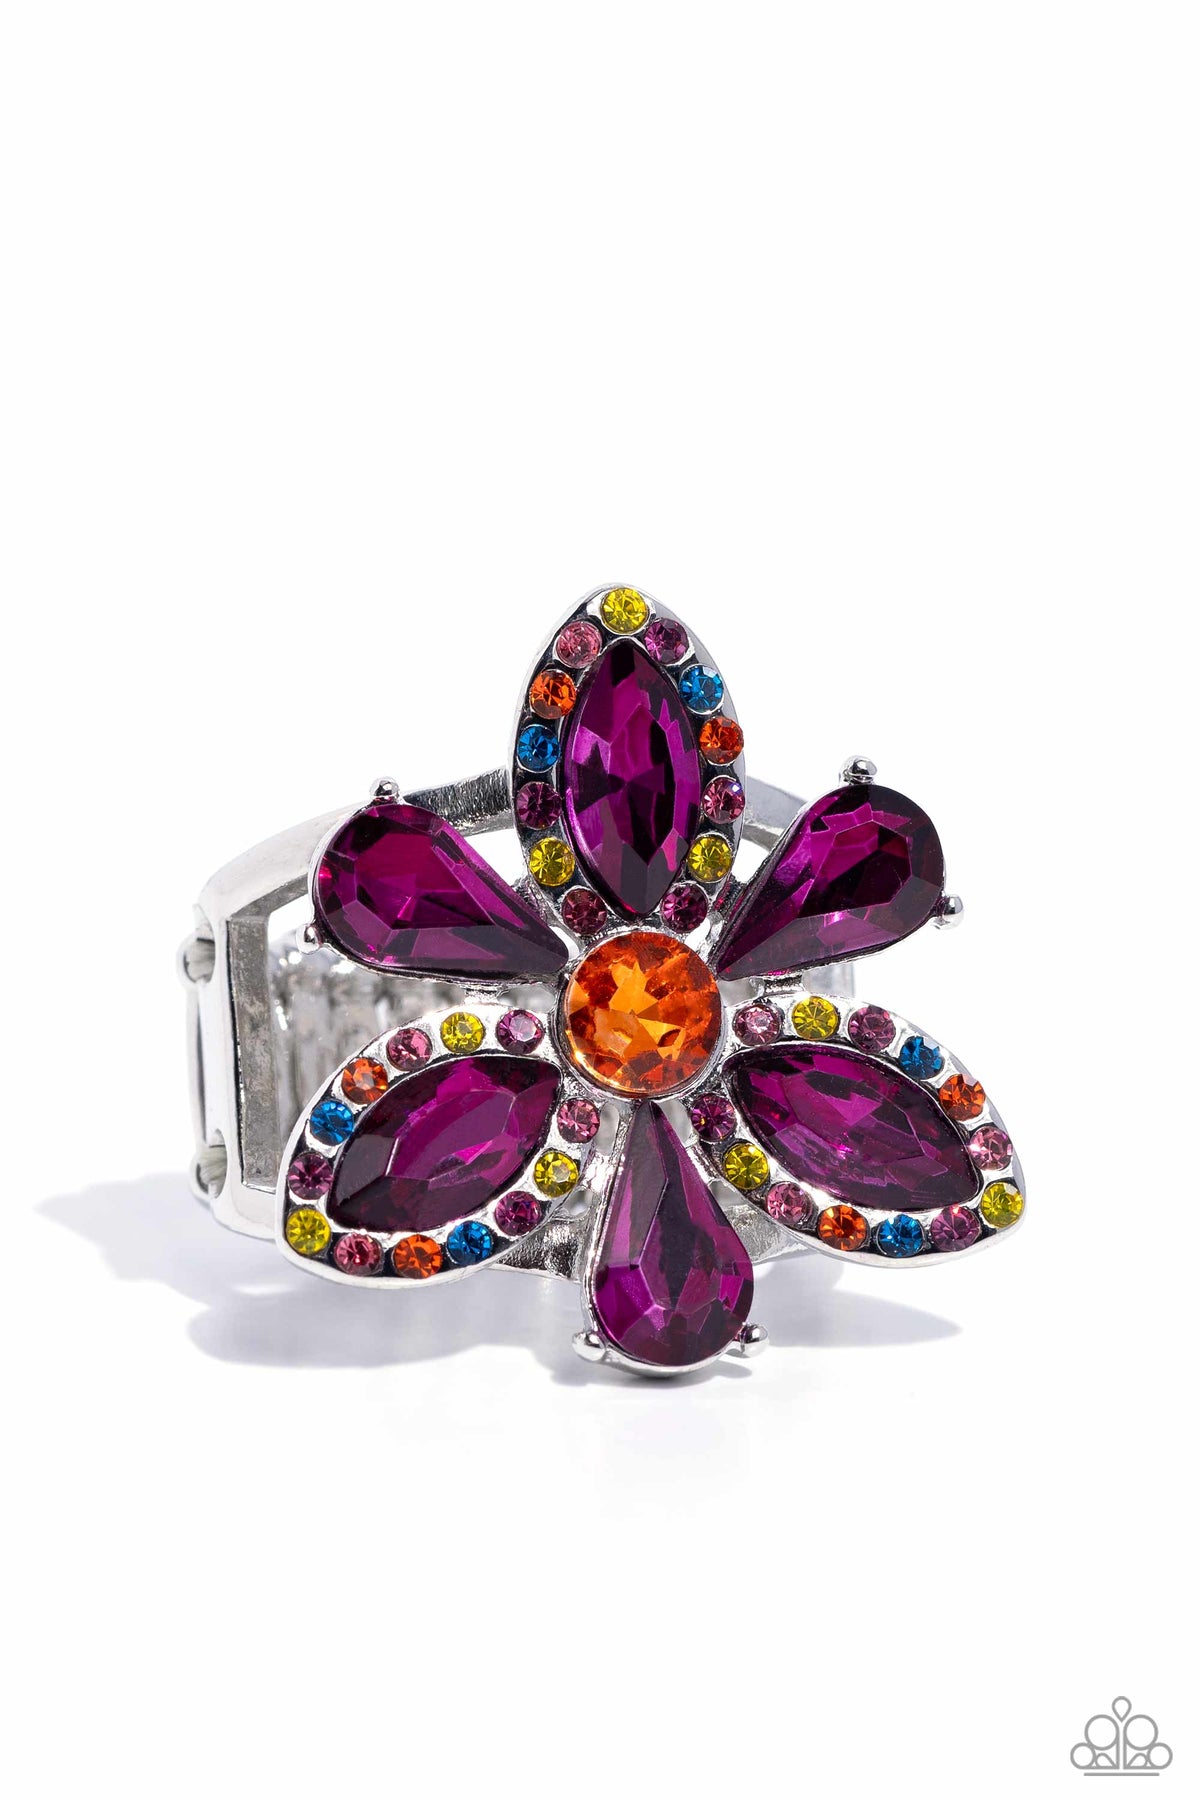 Blazing Blooms Multi &amp; Purple Rhinestone Floral Ring - Paparazzi Accessories- lightbox - CarasShop.com - $5 Jewelry by Cara Jewels